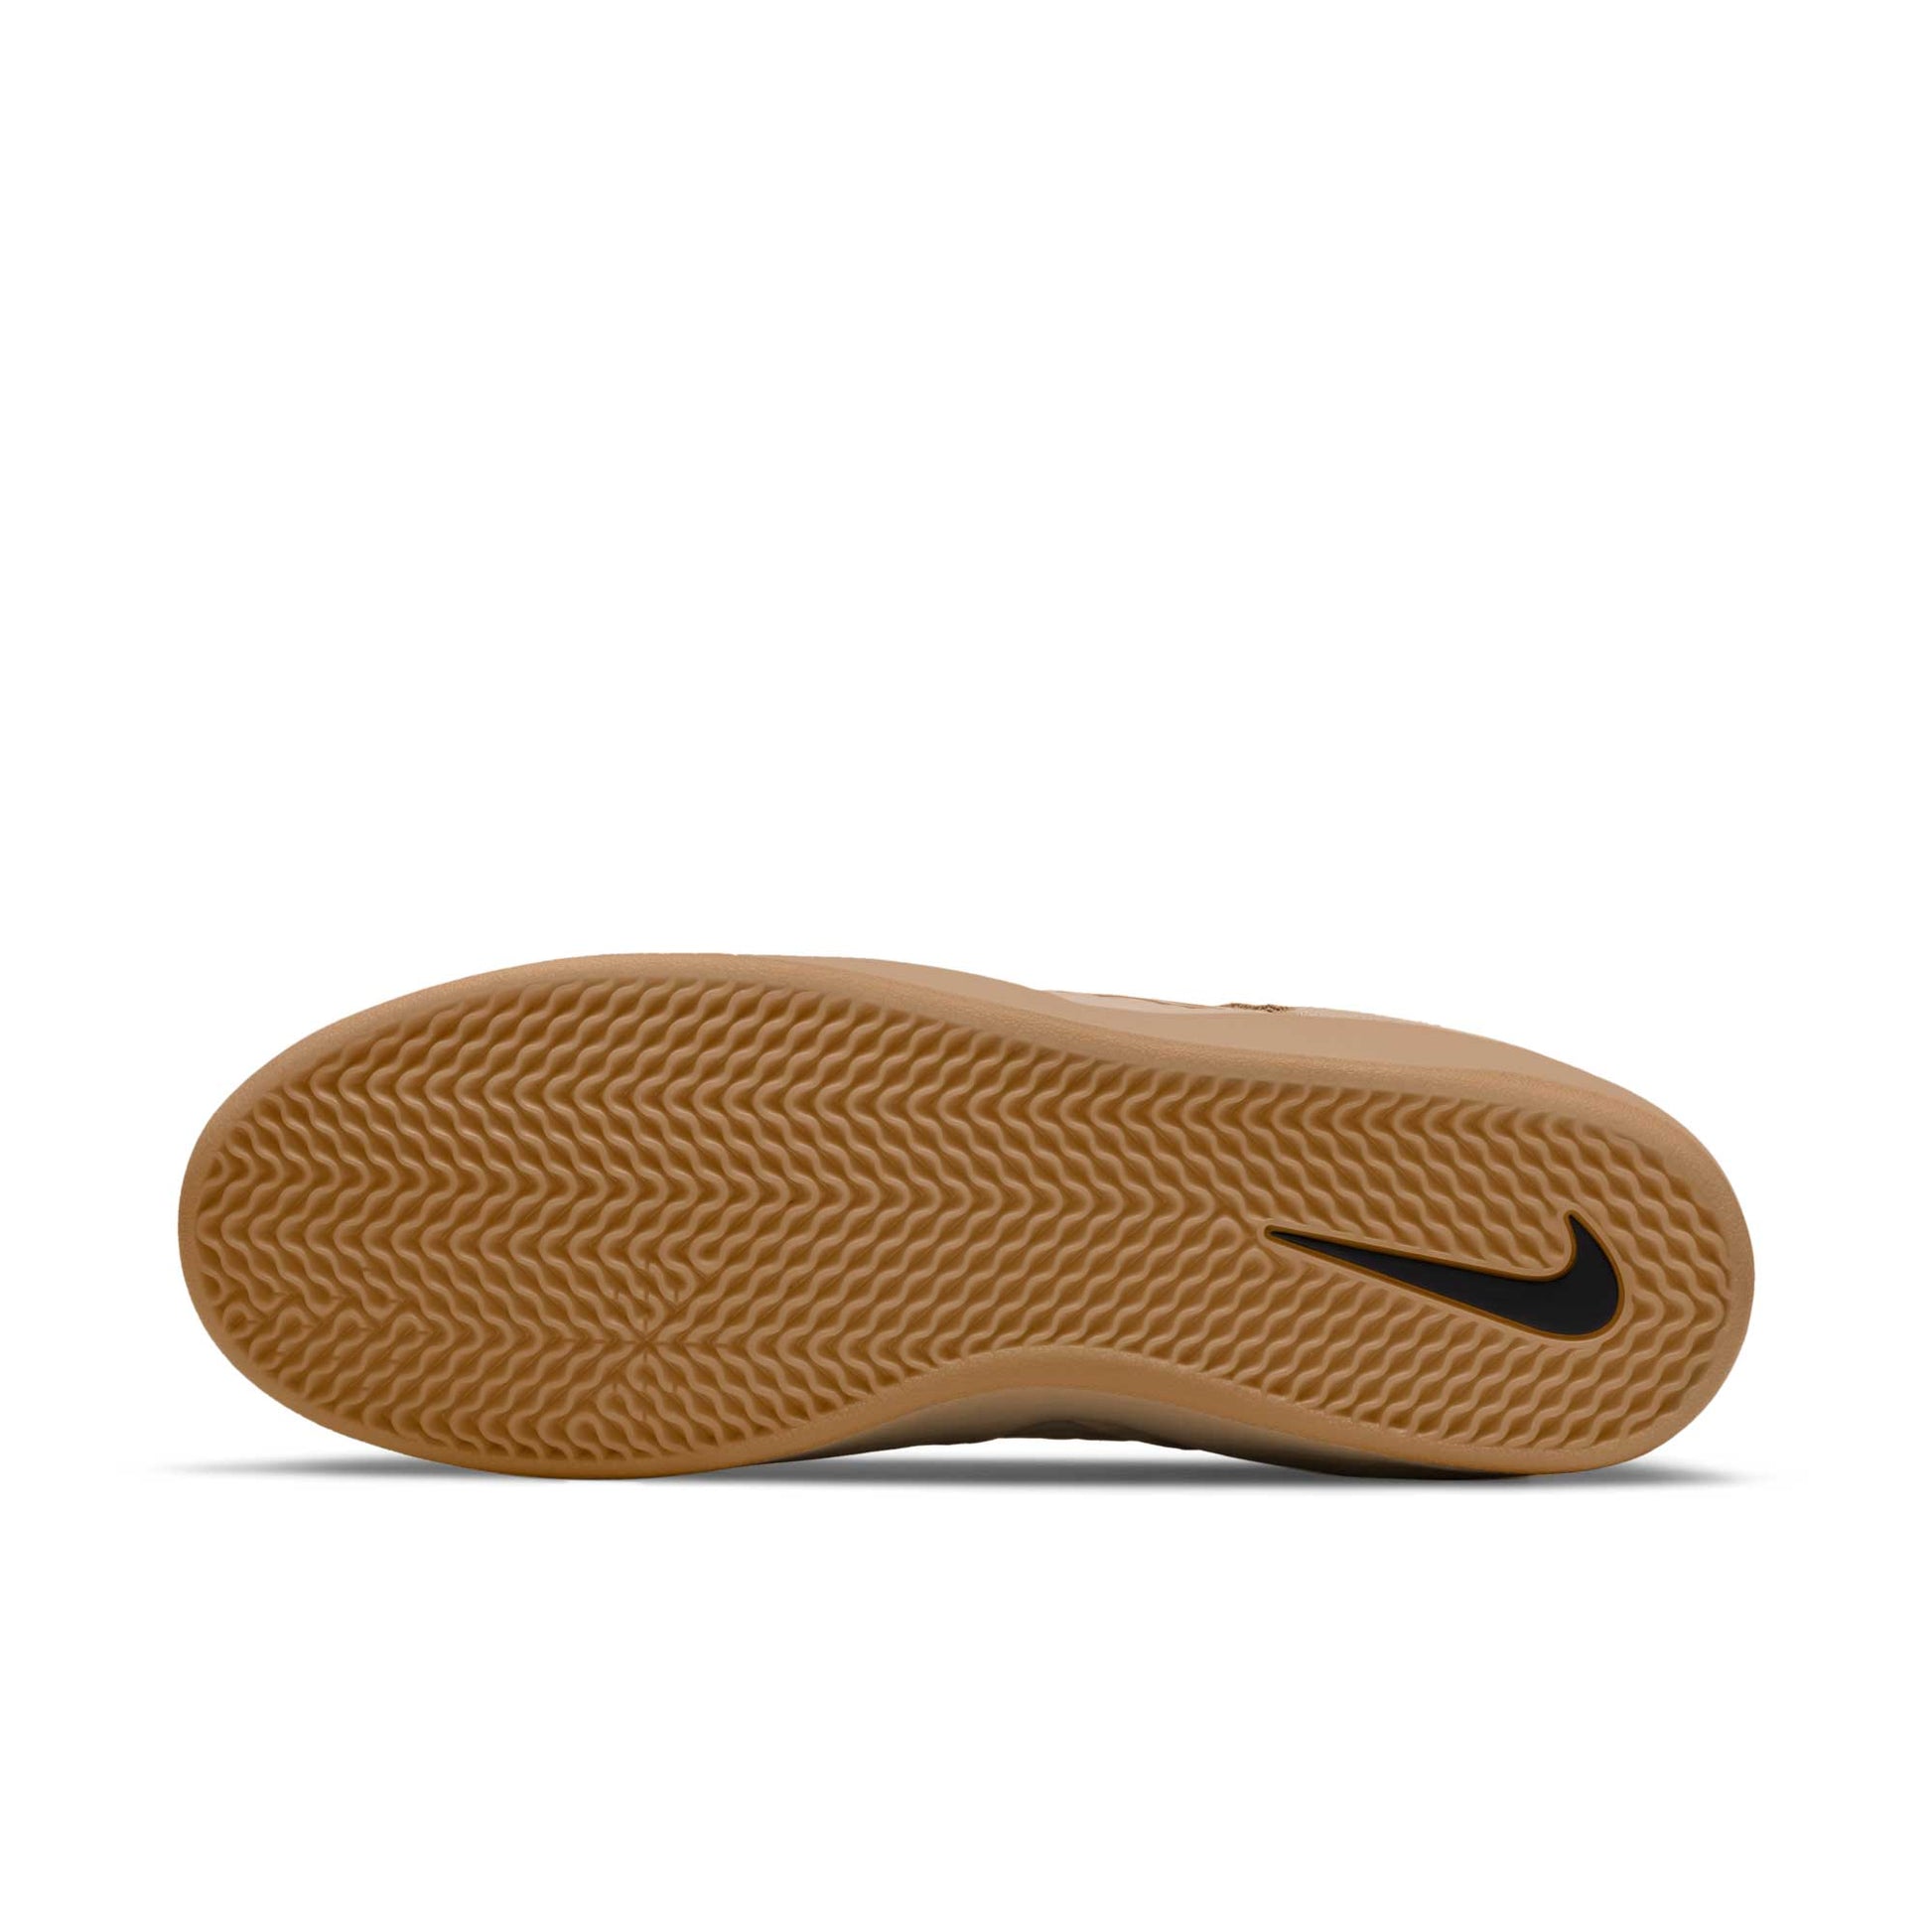 Nike SB Ishod Wair, flax/wheat-flax-gum light brown - Tiki Room Skateboards - 8